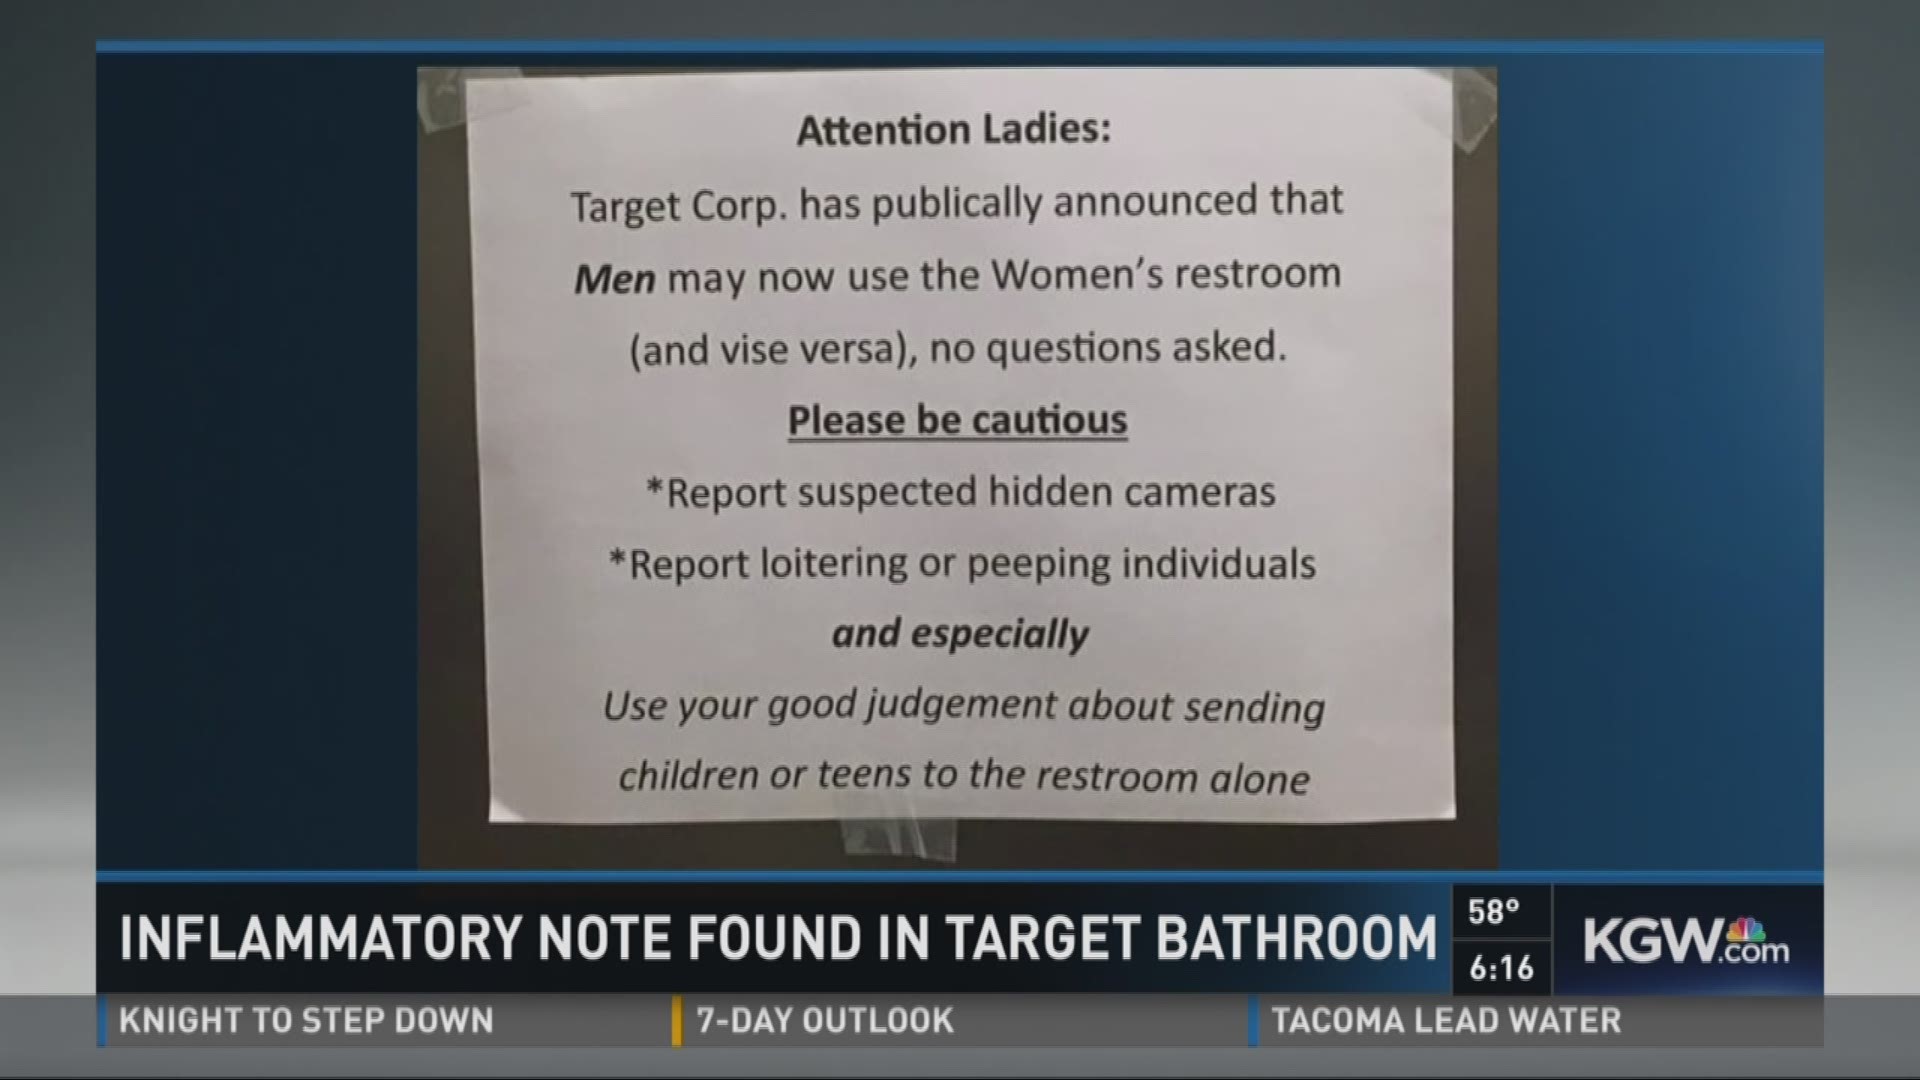 Inflammatory note found in Target bathroom